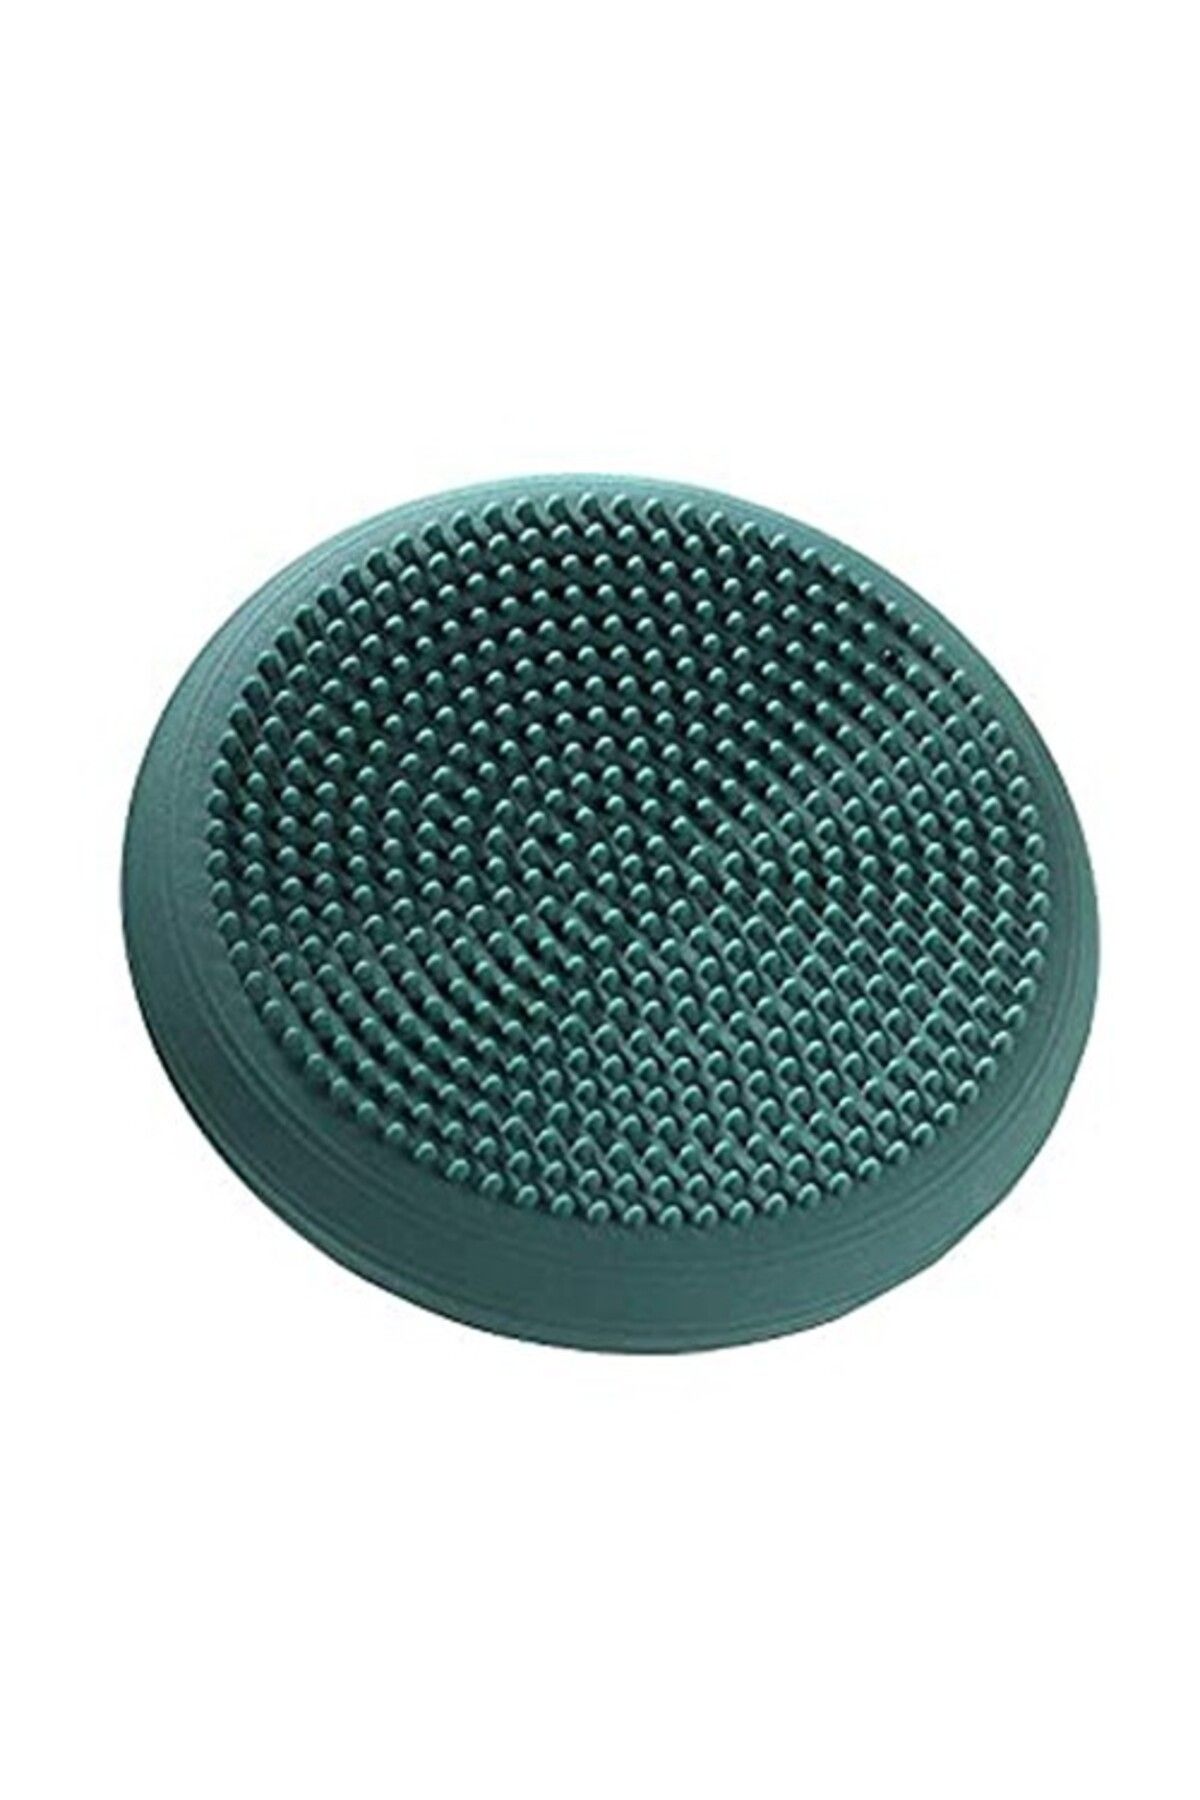 Theraband ® Ball Cushion Senso Yeşil 33 Cm